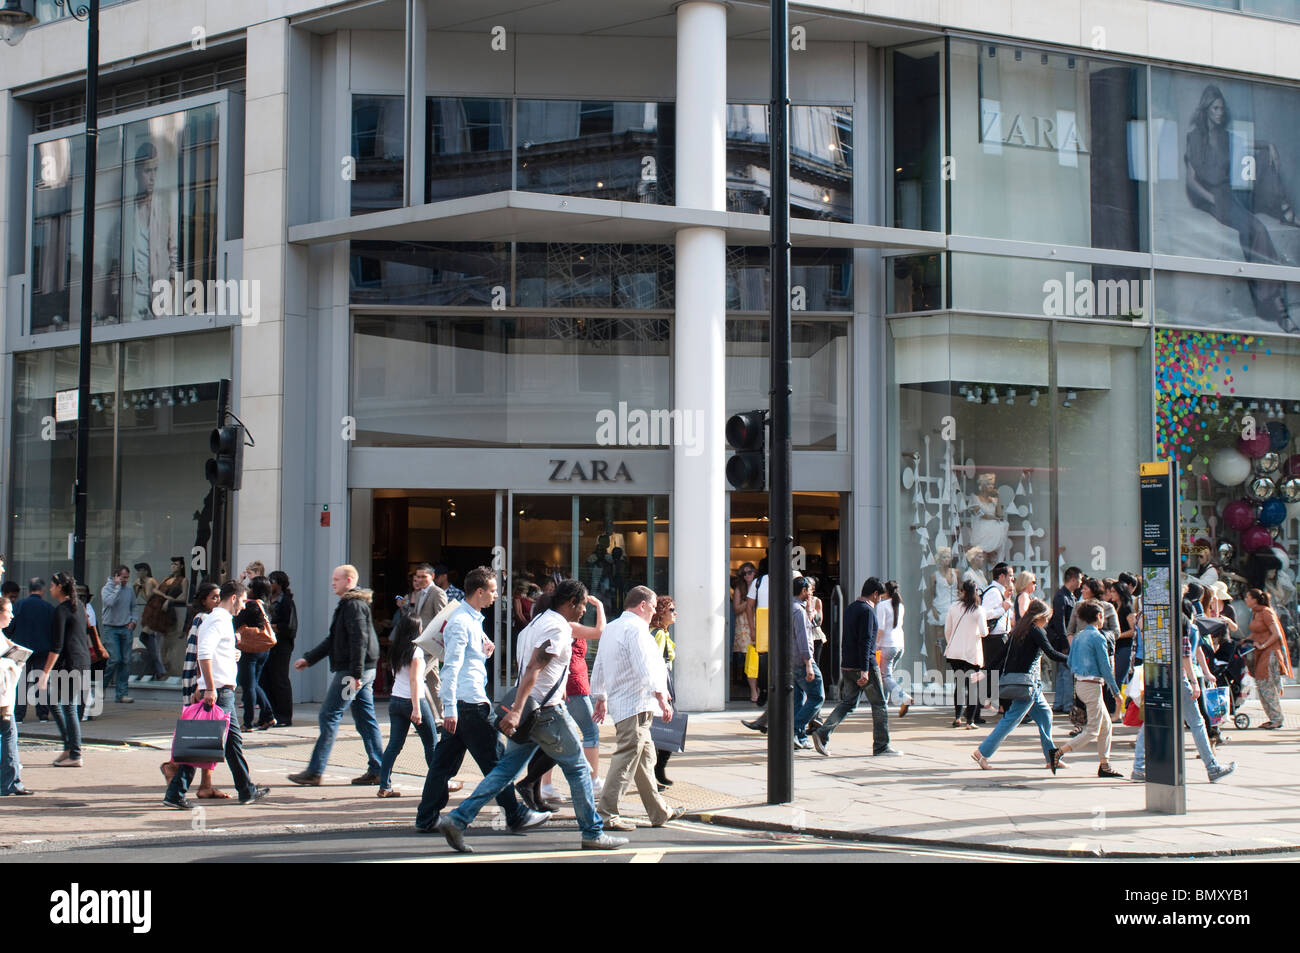 Zara shop on Oxford Street, London, UK Stock Photo - Alamy